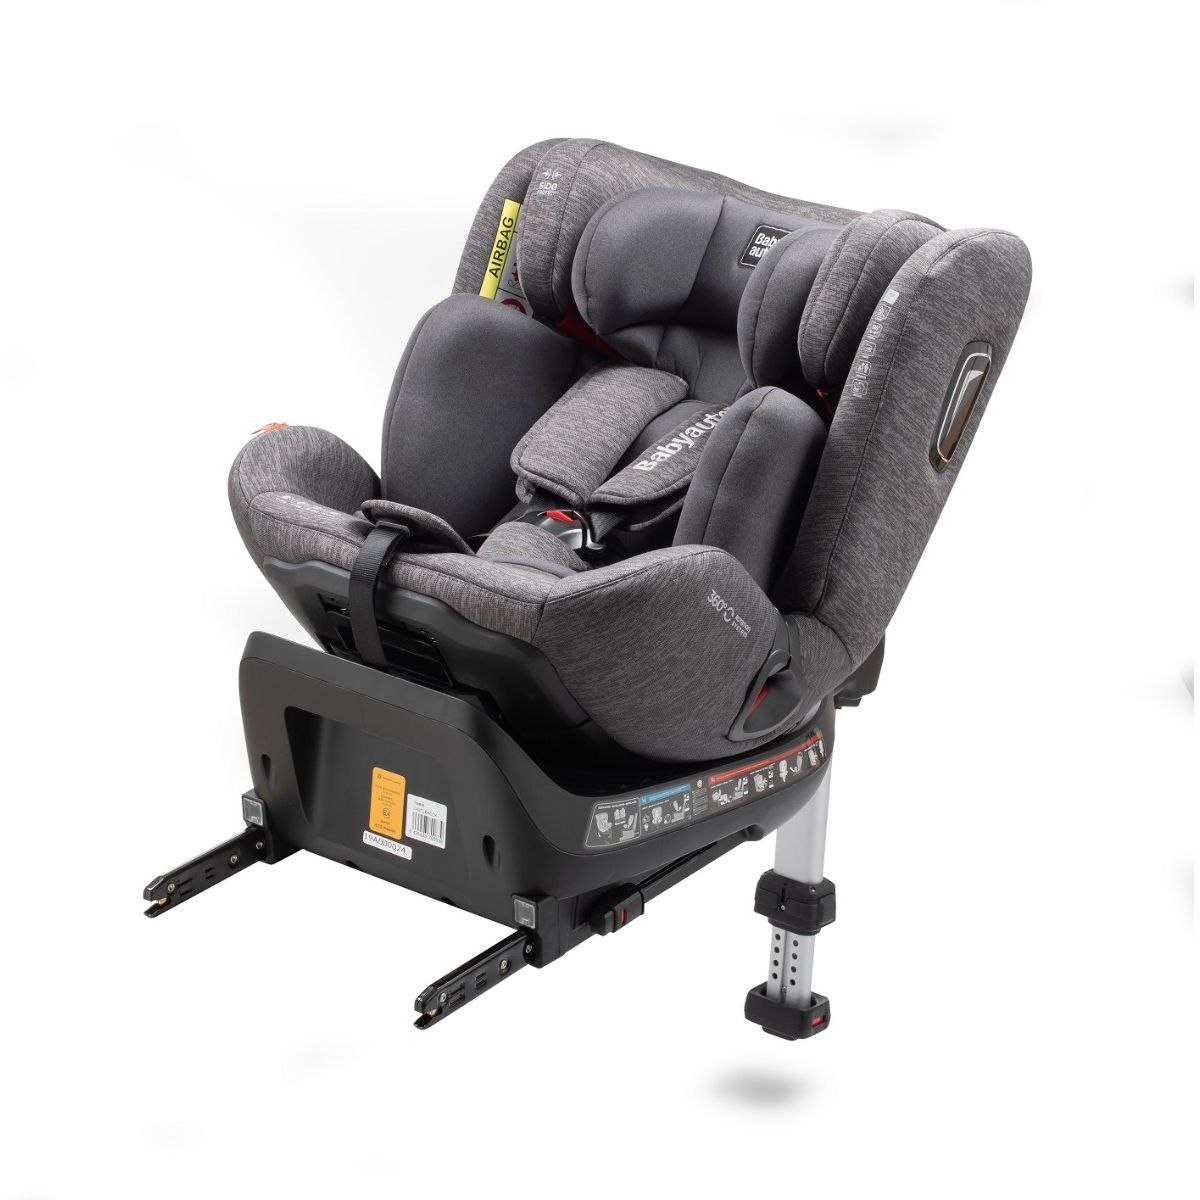 Cadeira Auto Tekie Clasic Isofix Leg Support - Grupo 0+/1/2/3